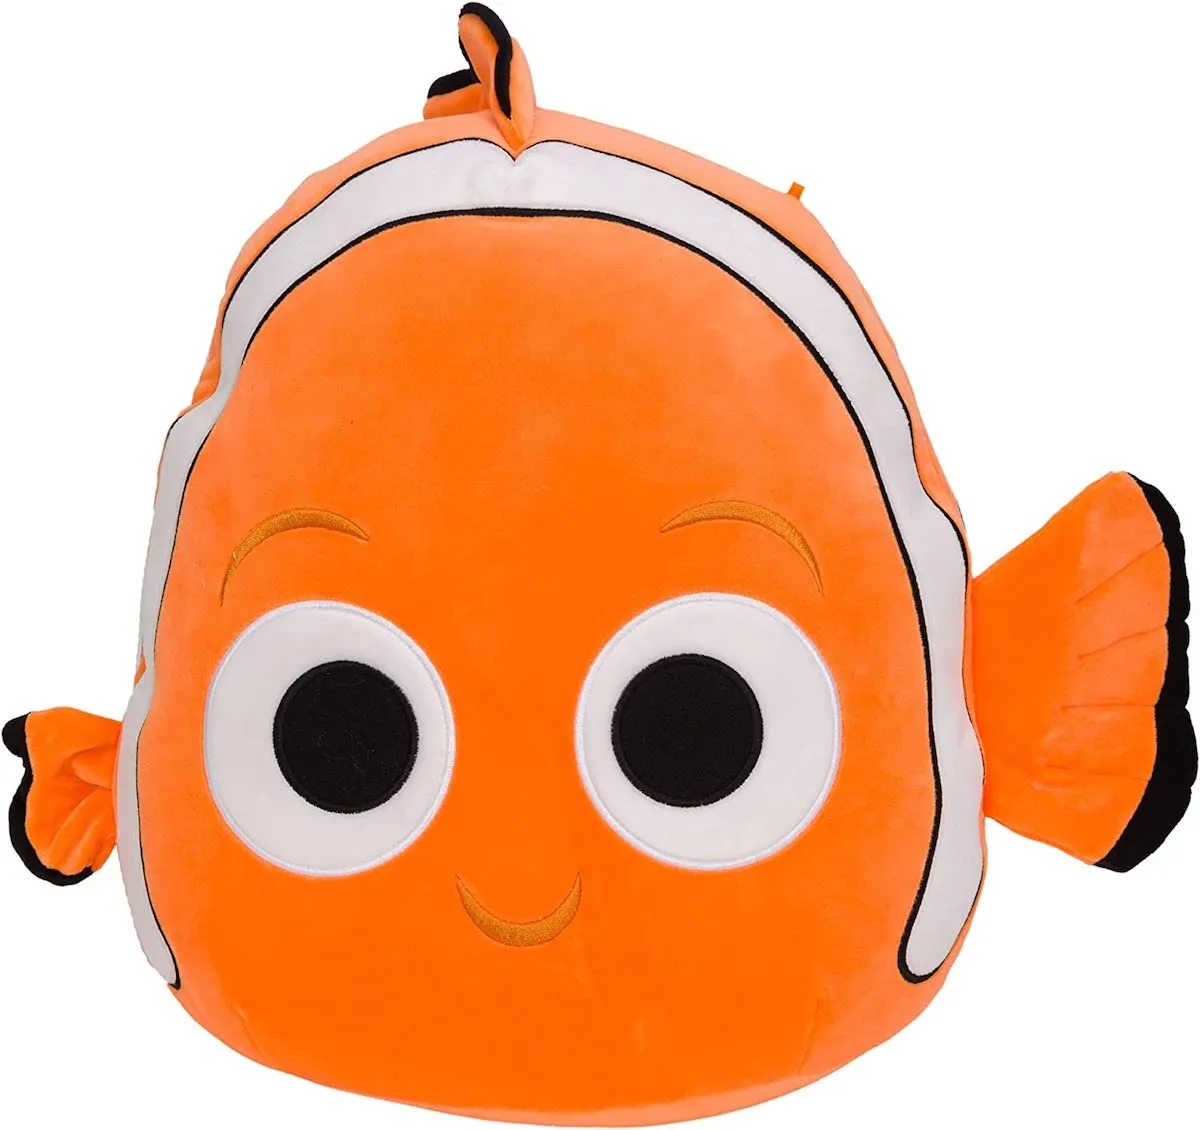 Nemo Squishmallow - an orange clown fish with big eyes